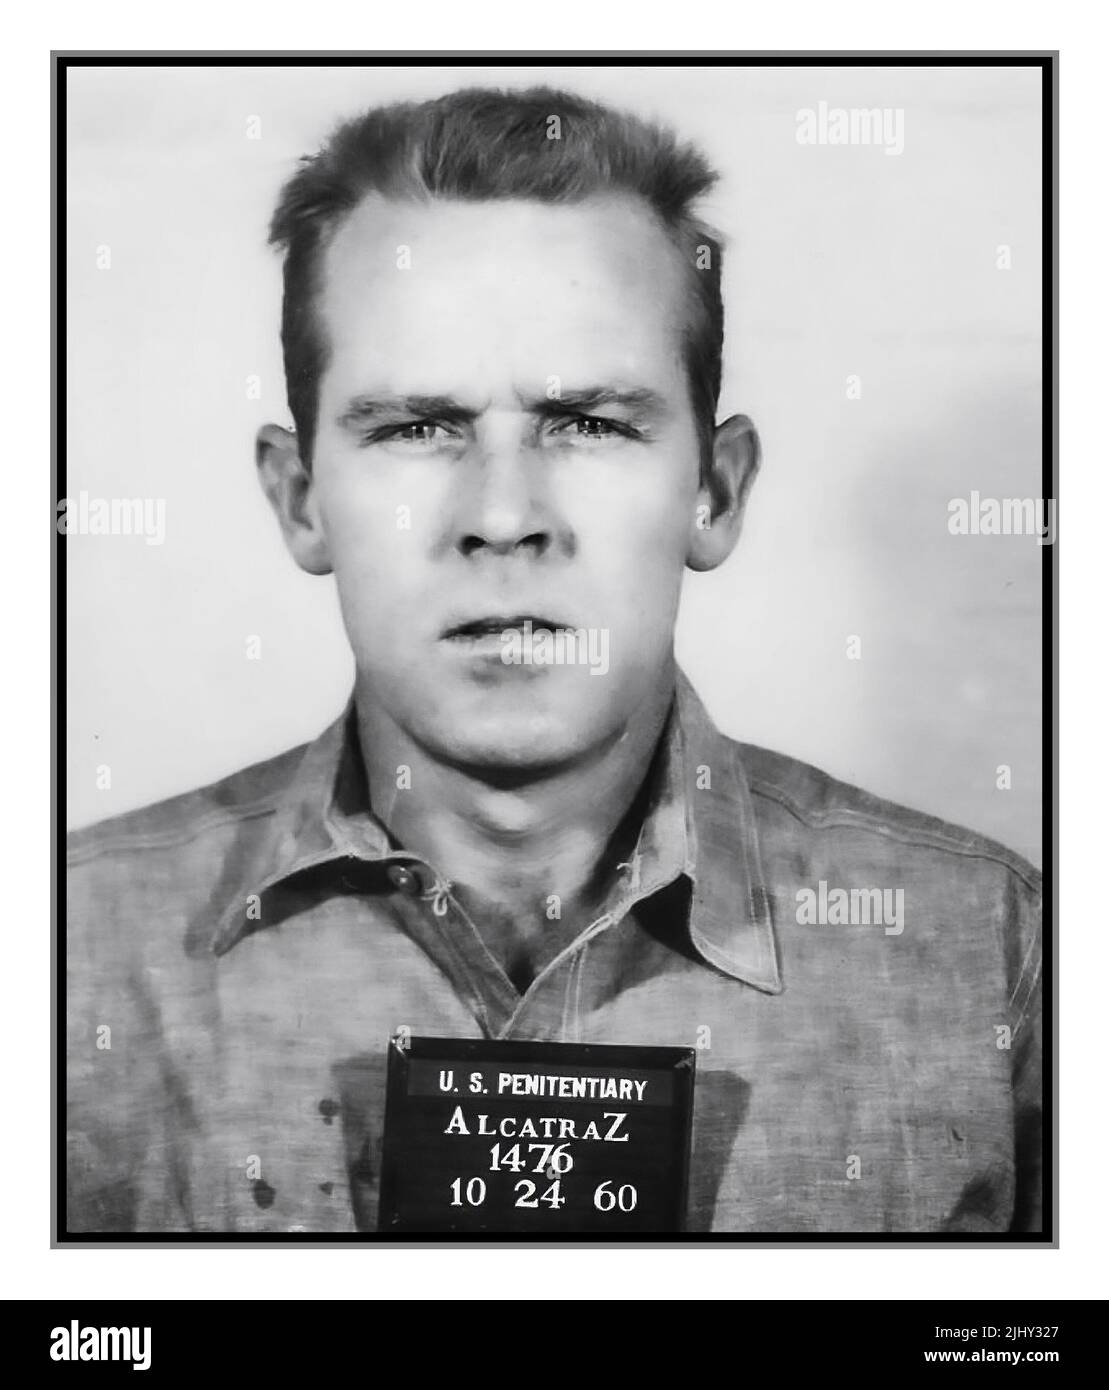 ALACATRAZ GEFÄNGNIS MUGSHOT GEFANGENER John Anglin Nr. 1476, berühmter US-Verbrecher für die Flucht aus Alcatraz 1960 Alcatraz San Francisco Kalifornien USA Stockfoto